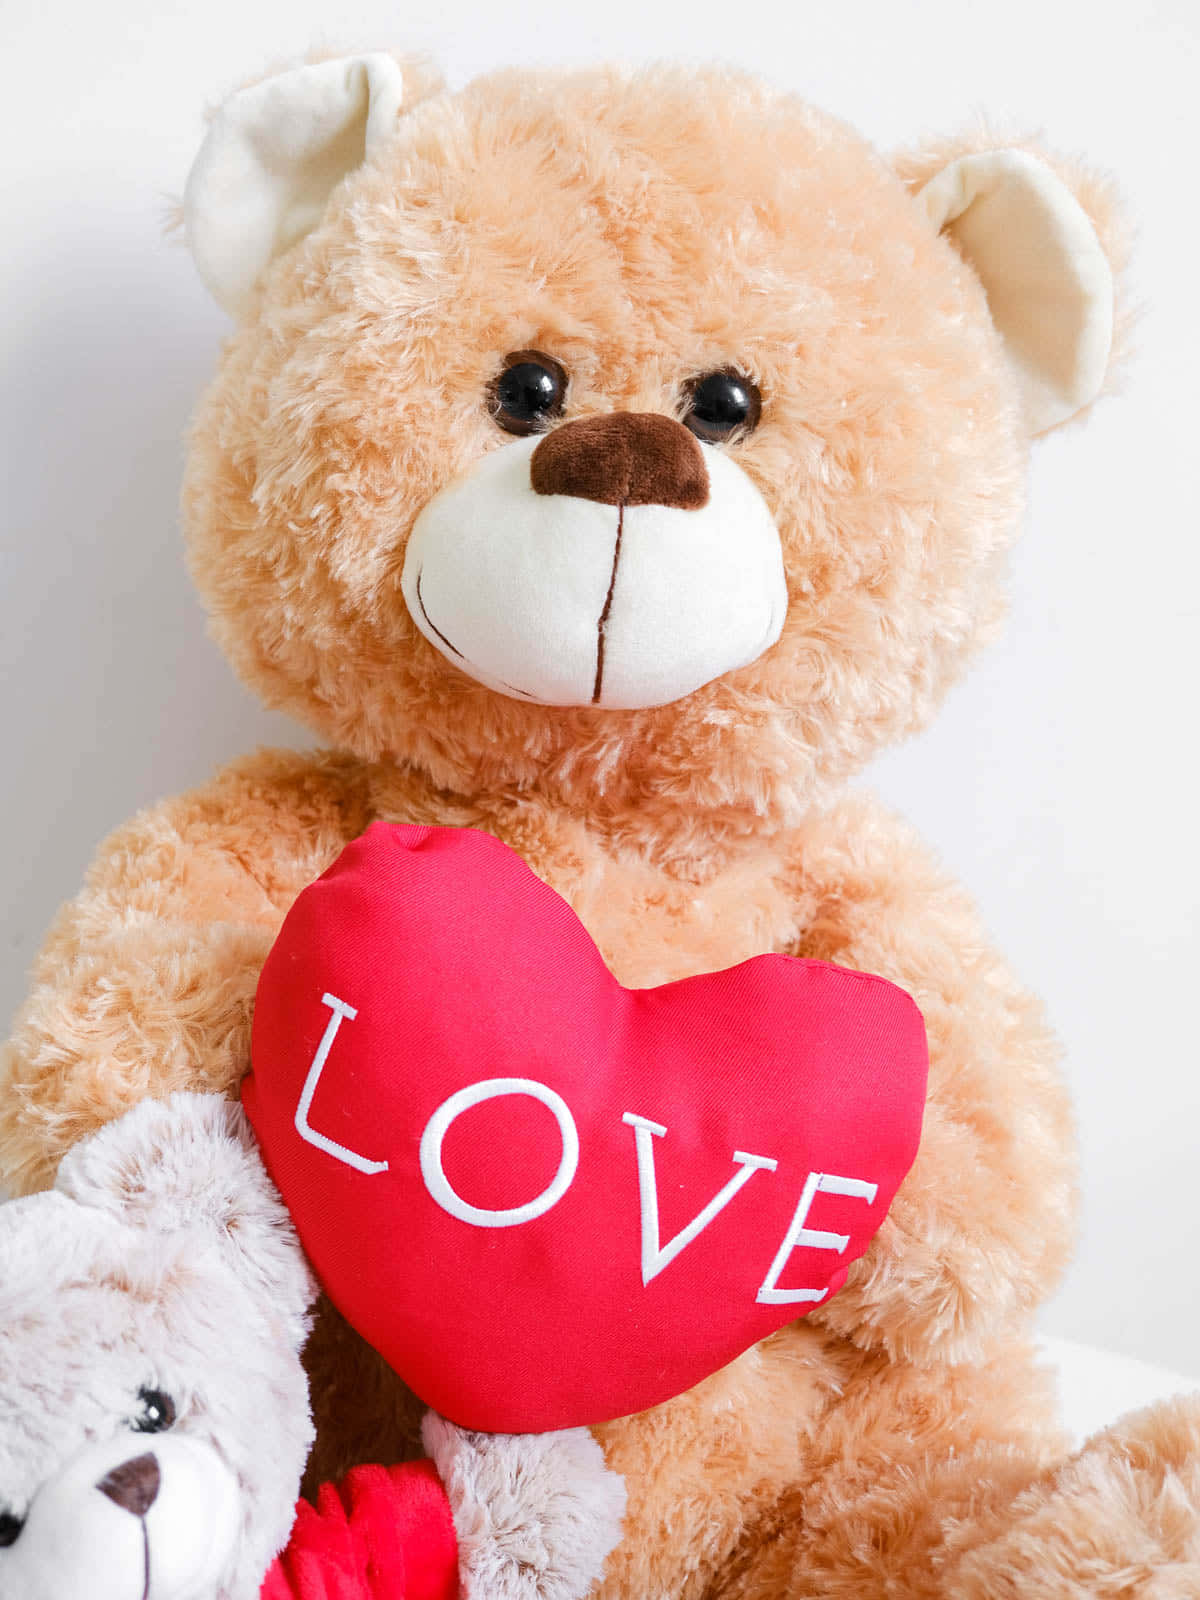 A Teddy Bear Holding A Heart Shaped Pillow